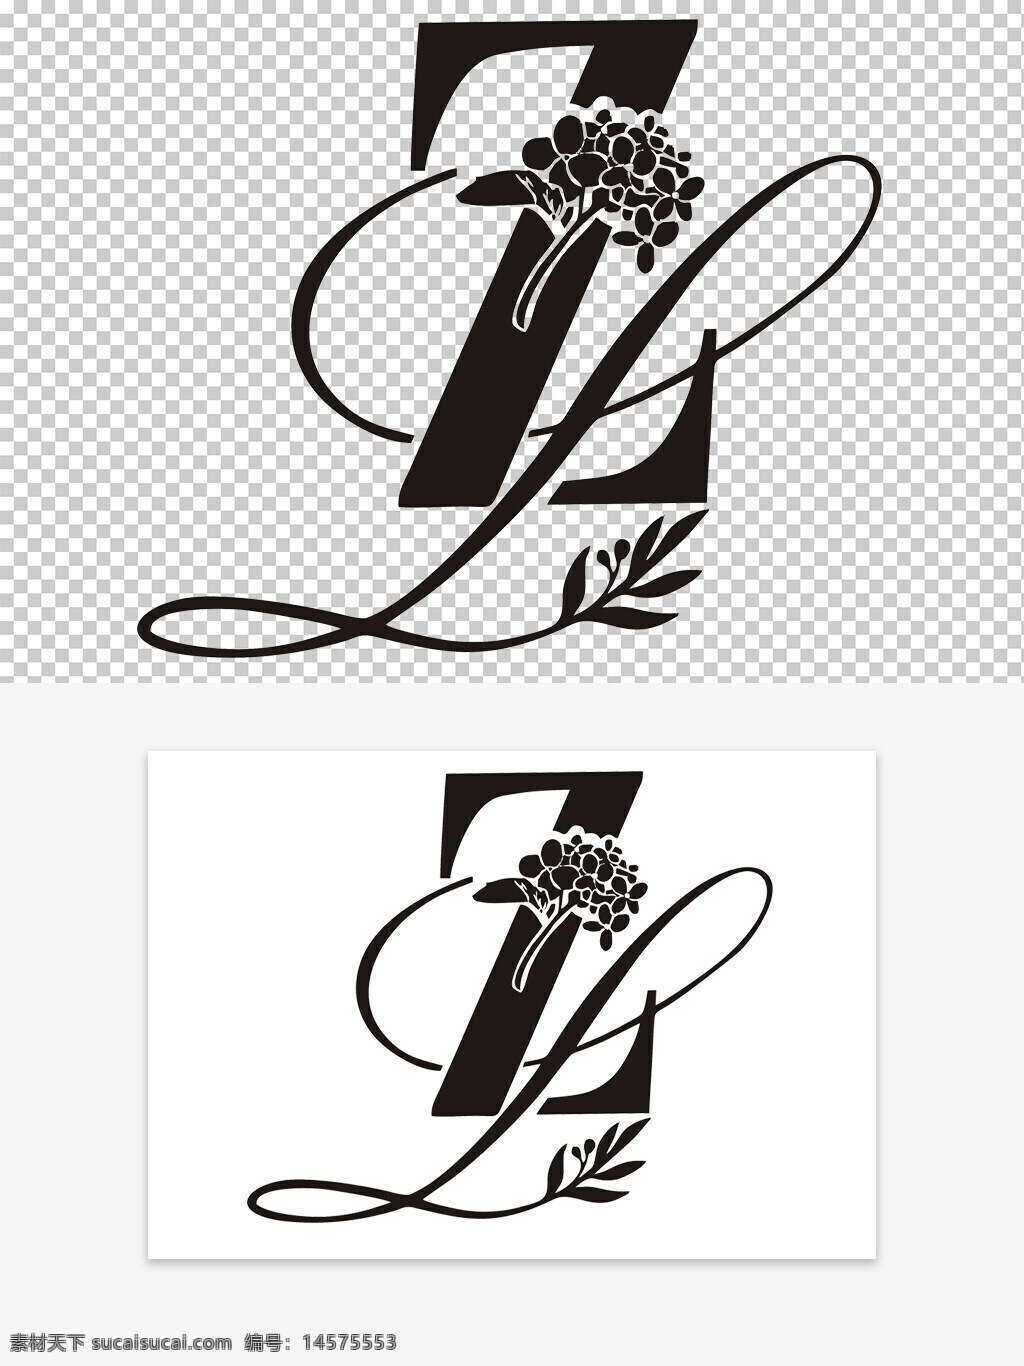 婚庆logo 婚礼logo 大屏logo 字母logo zllogo设计 设计 广告设计